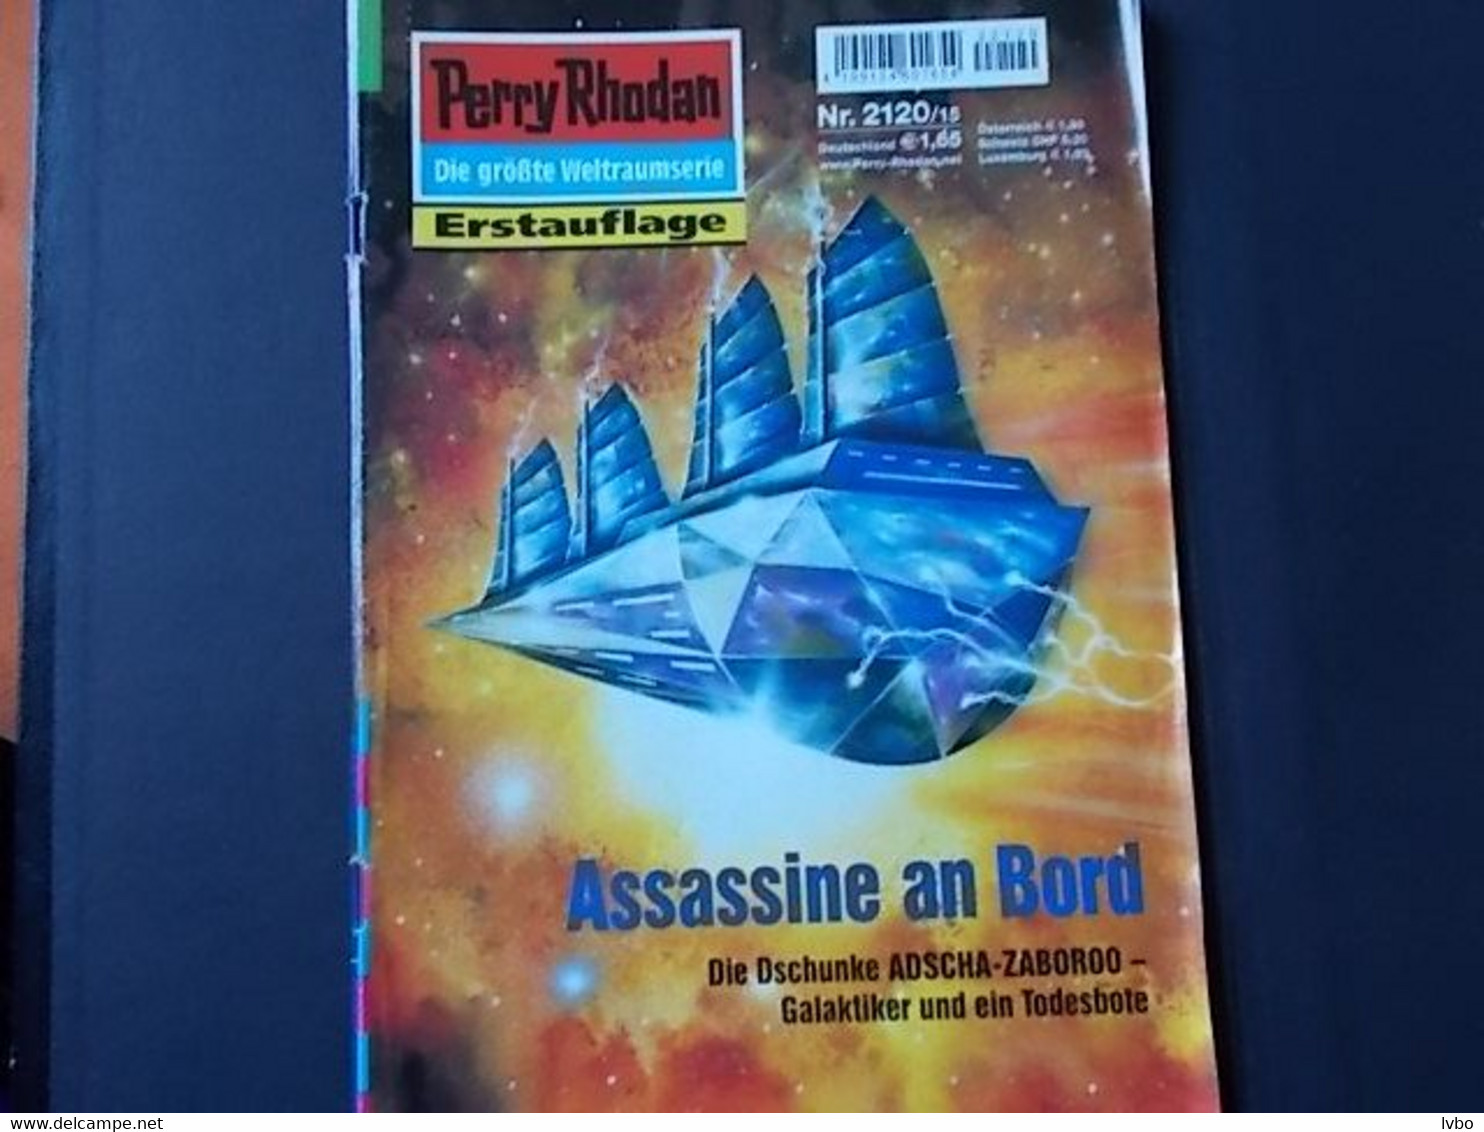 Perry Rhodan Nr 2120 Erstauflage Assassine An Bord - Sciencefiction